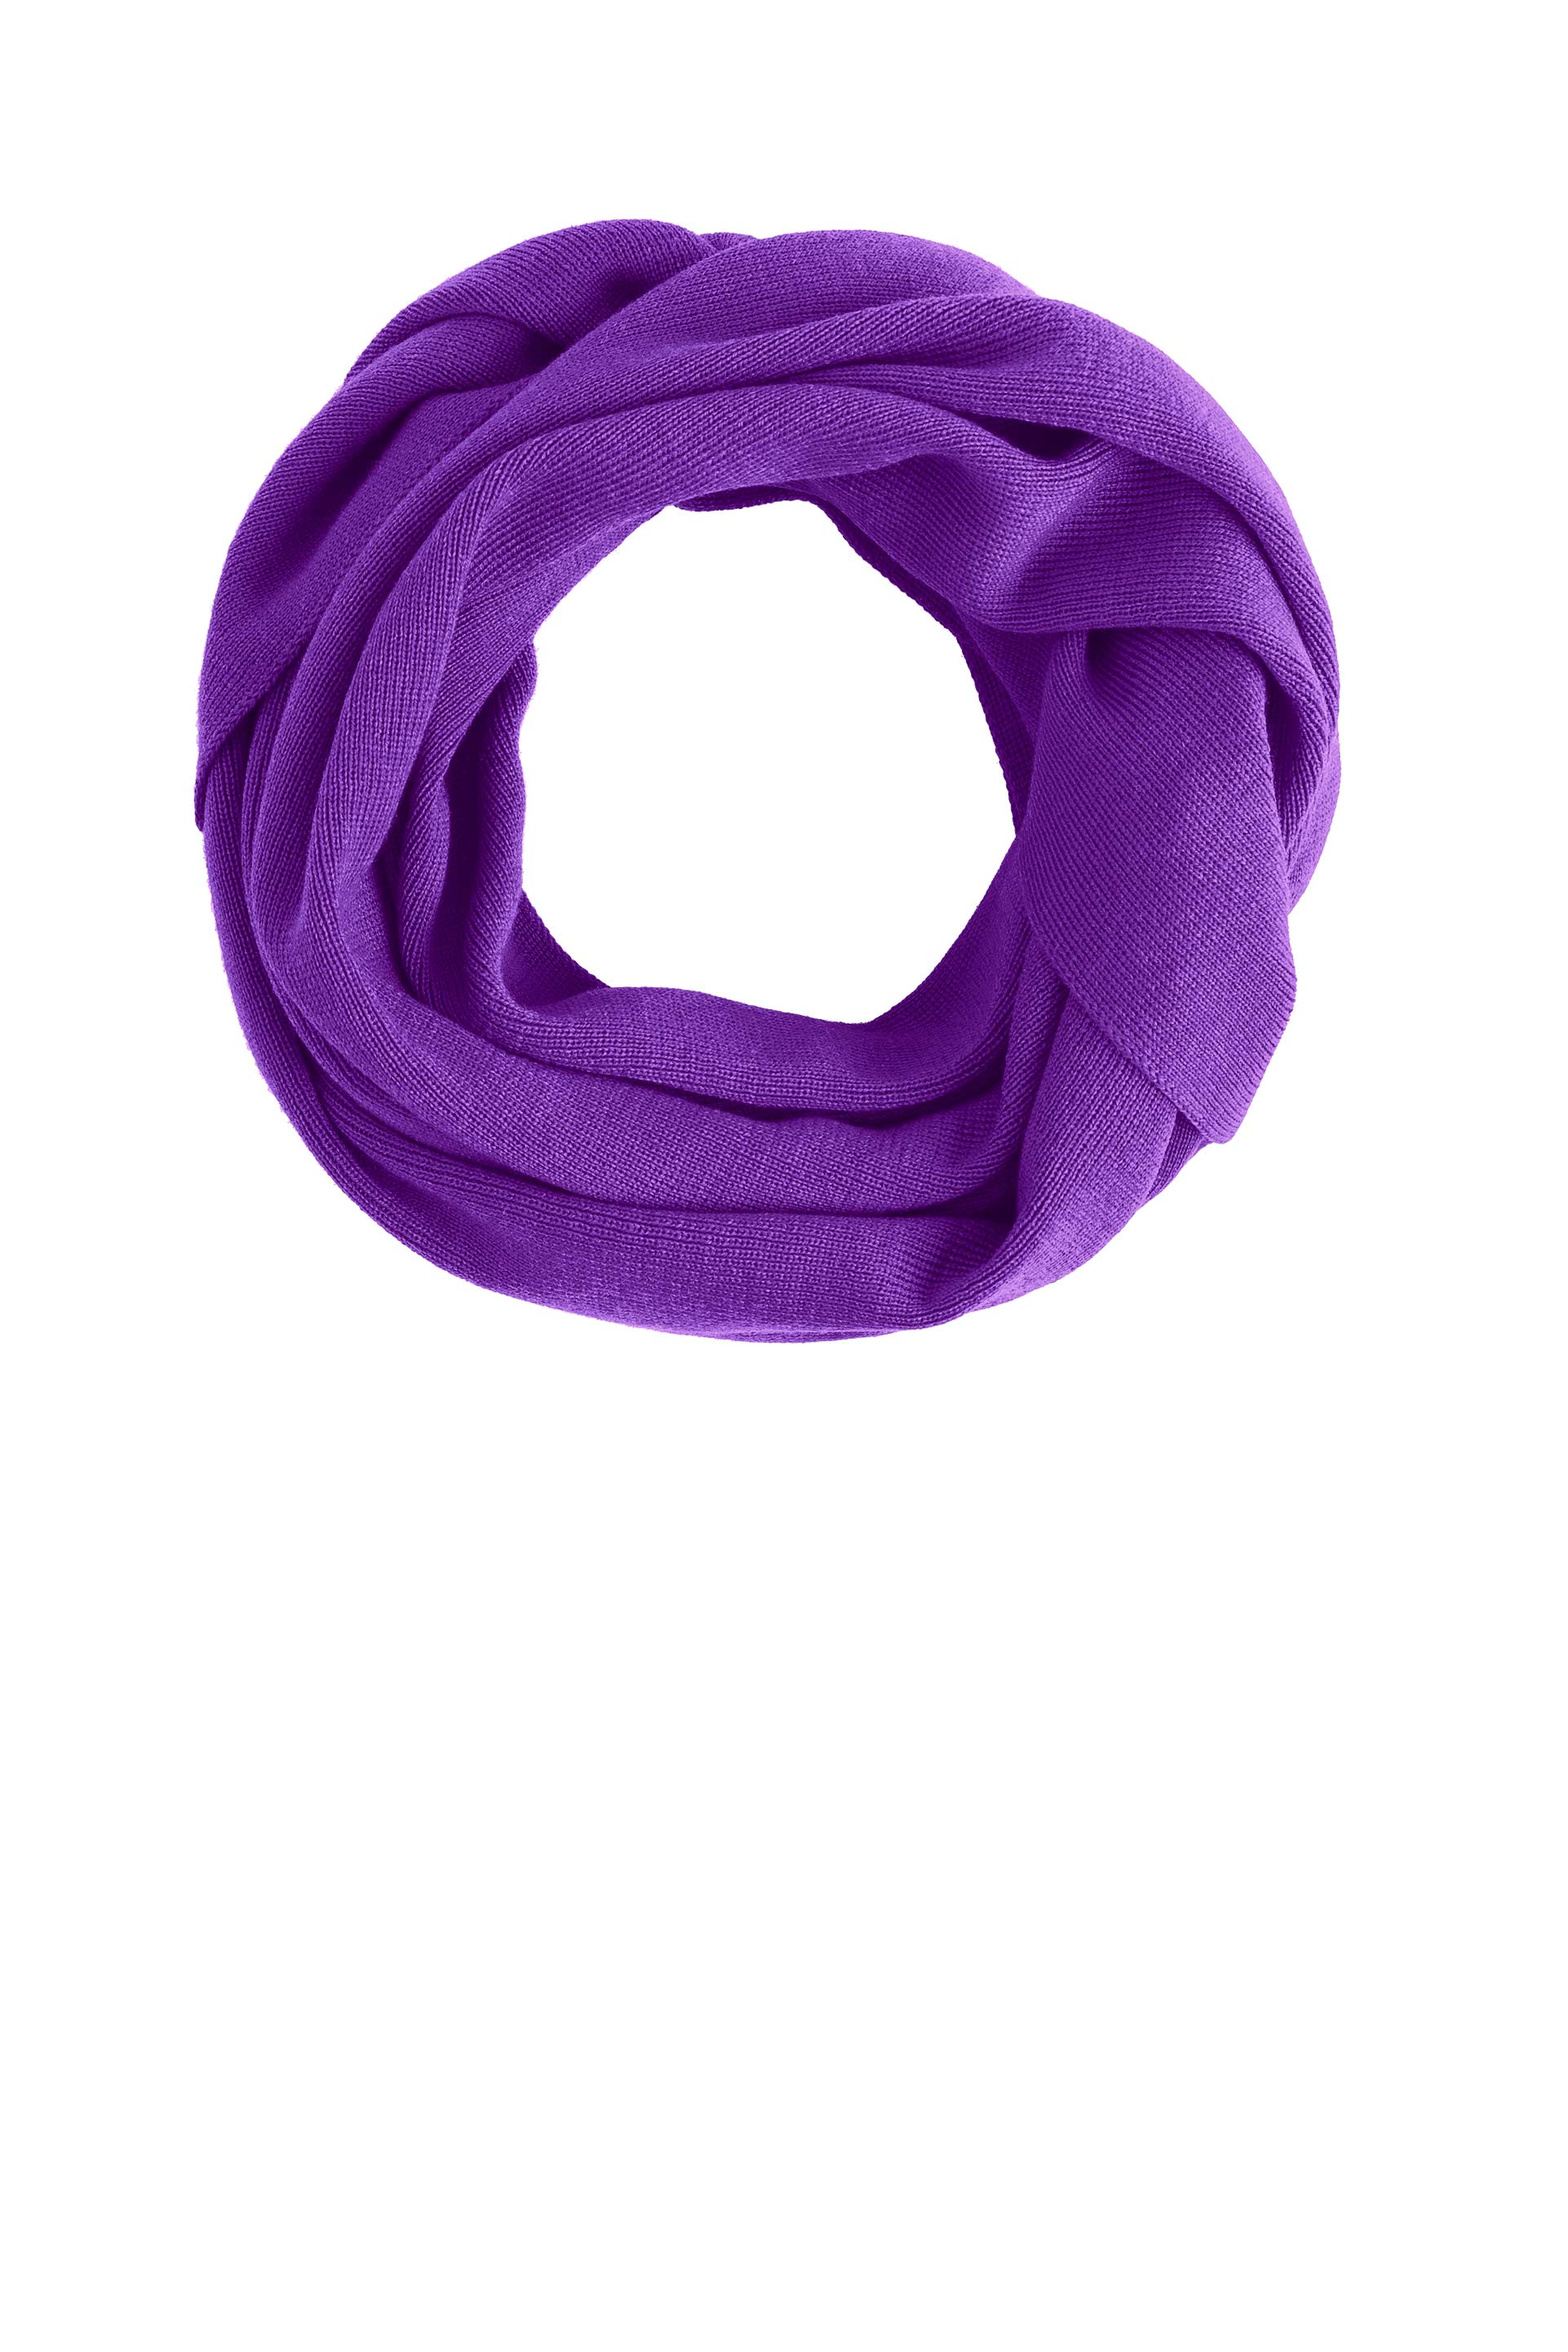 15258_merino_infinity_scarf_ultra_violet_aw20.jpg